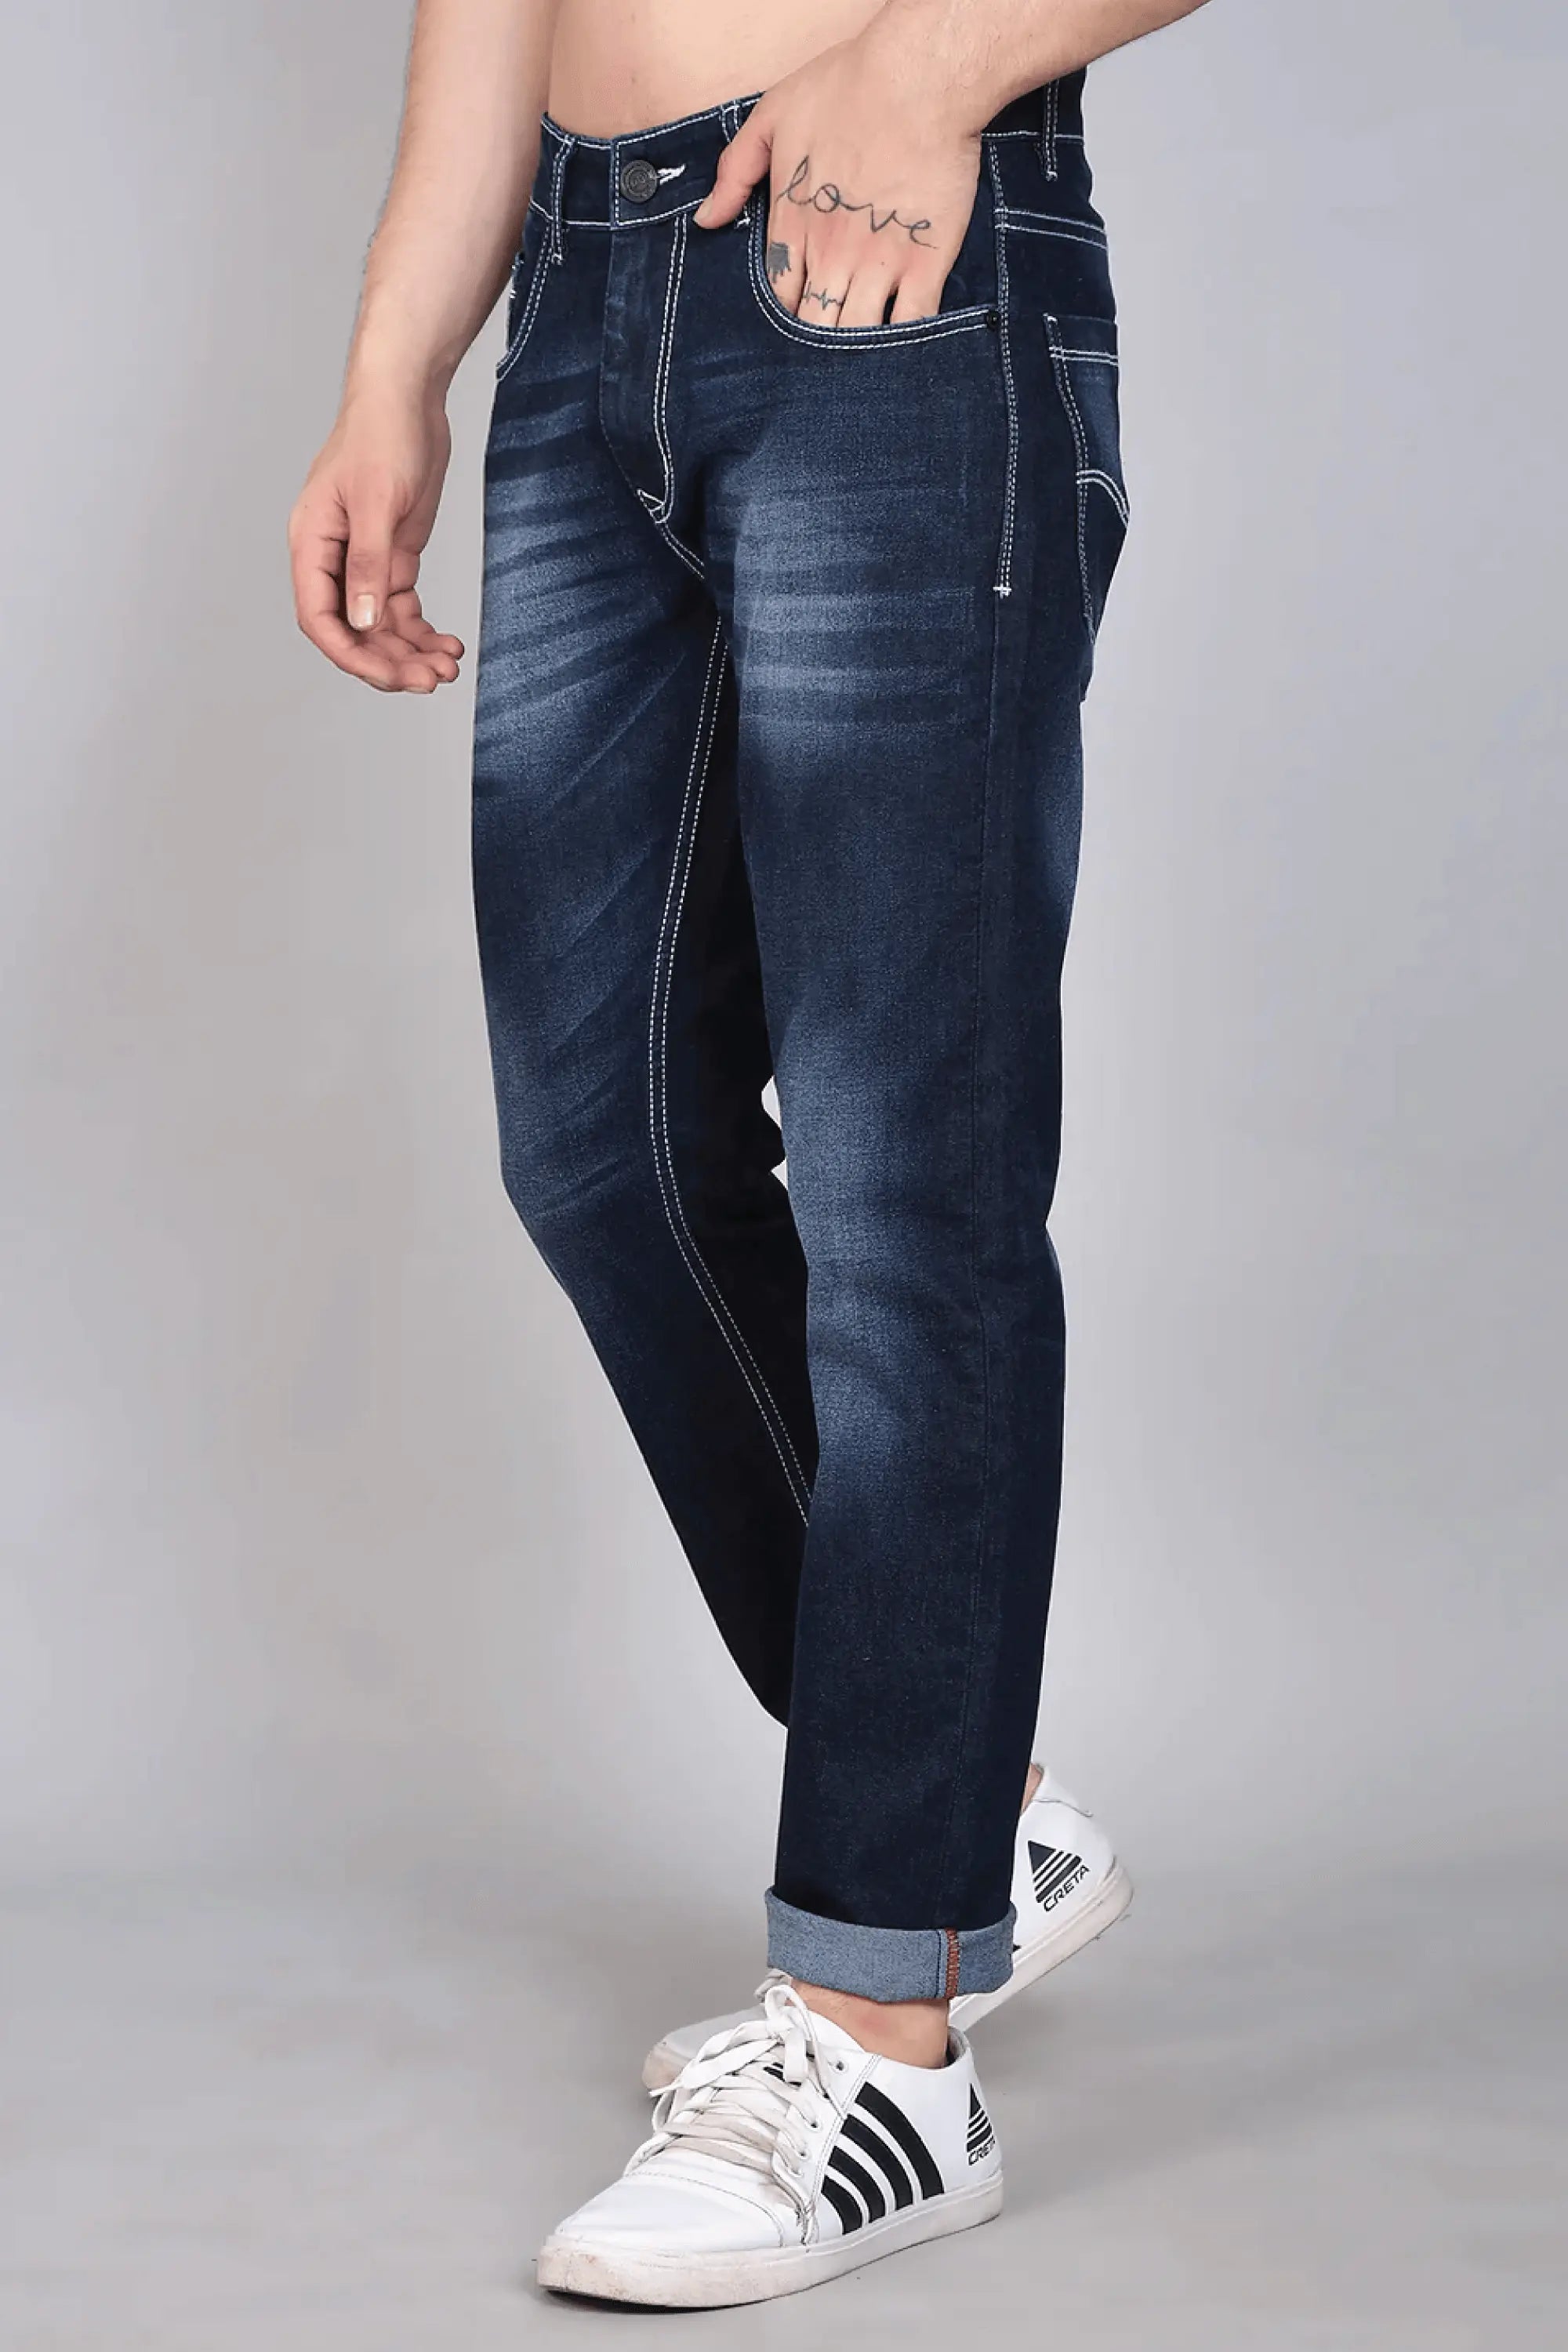 Men's Double L Jeans, Classic Fit, Flannel-Lined | Jeans at L.L.Bean